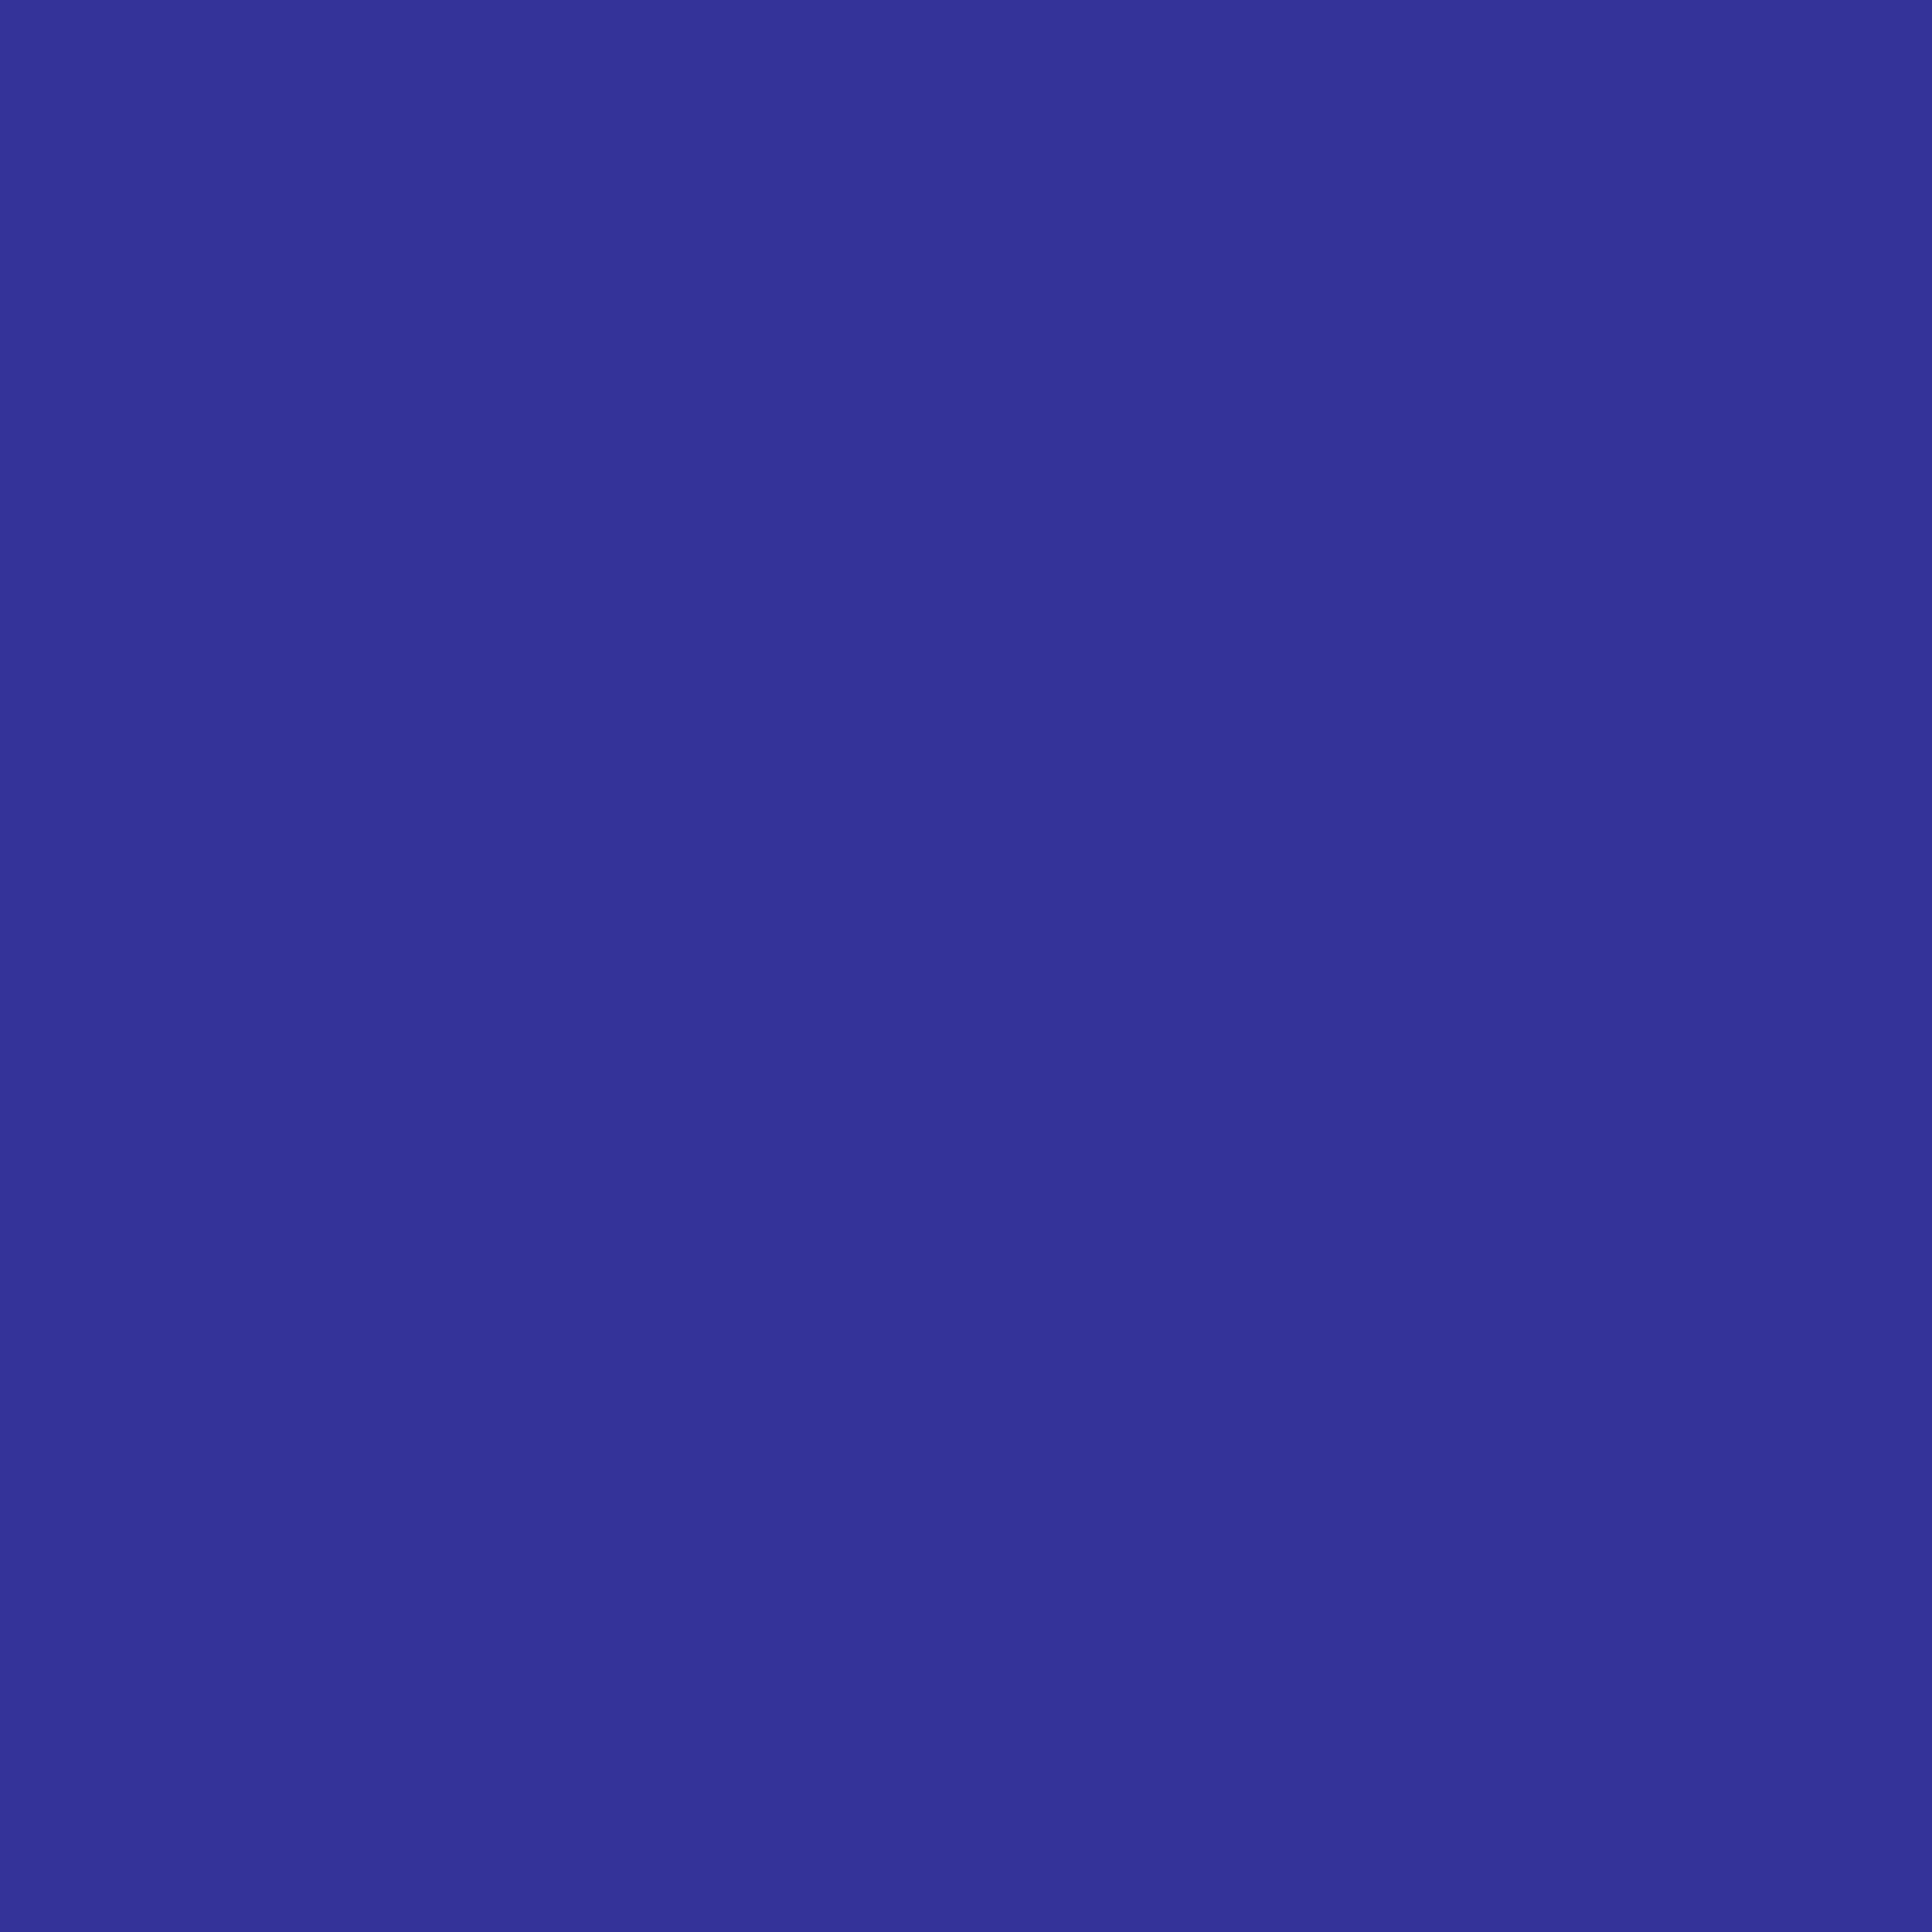 3600x3600 Blue Pigment Solid Color Background